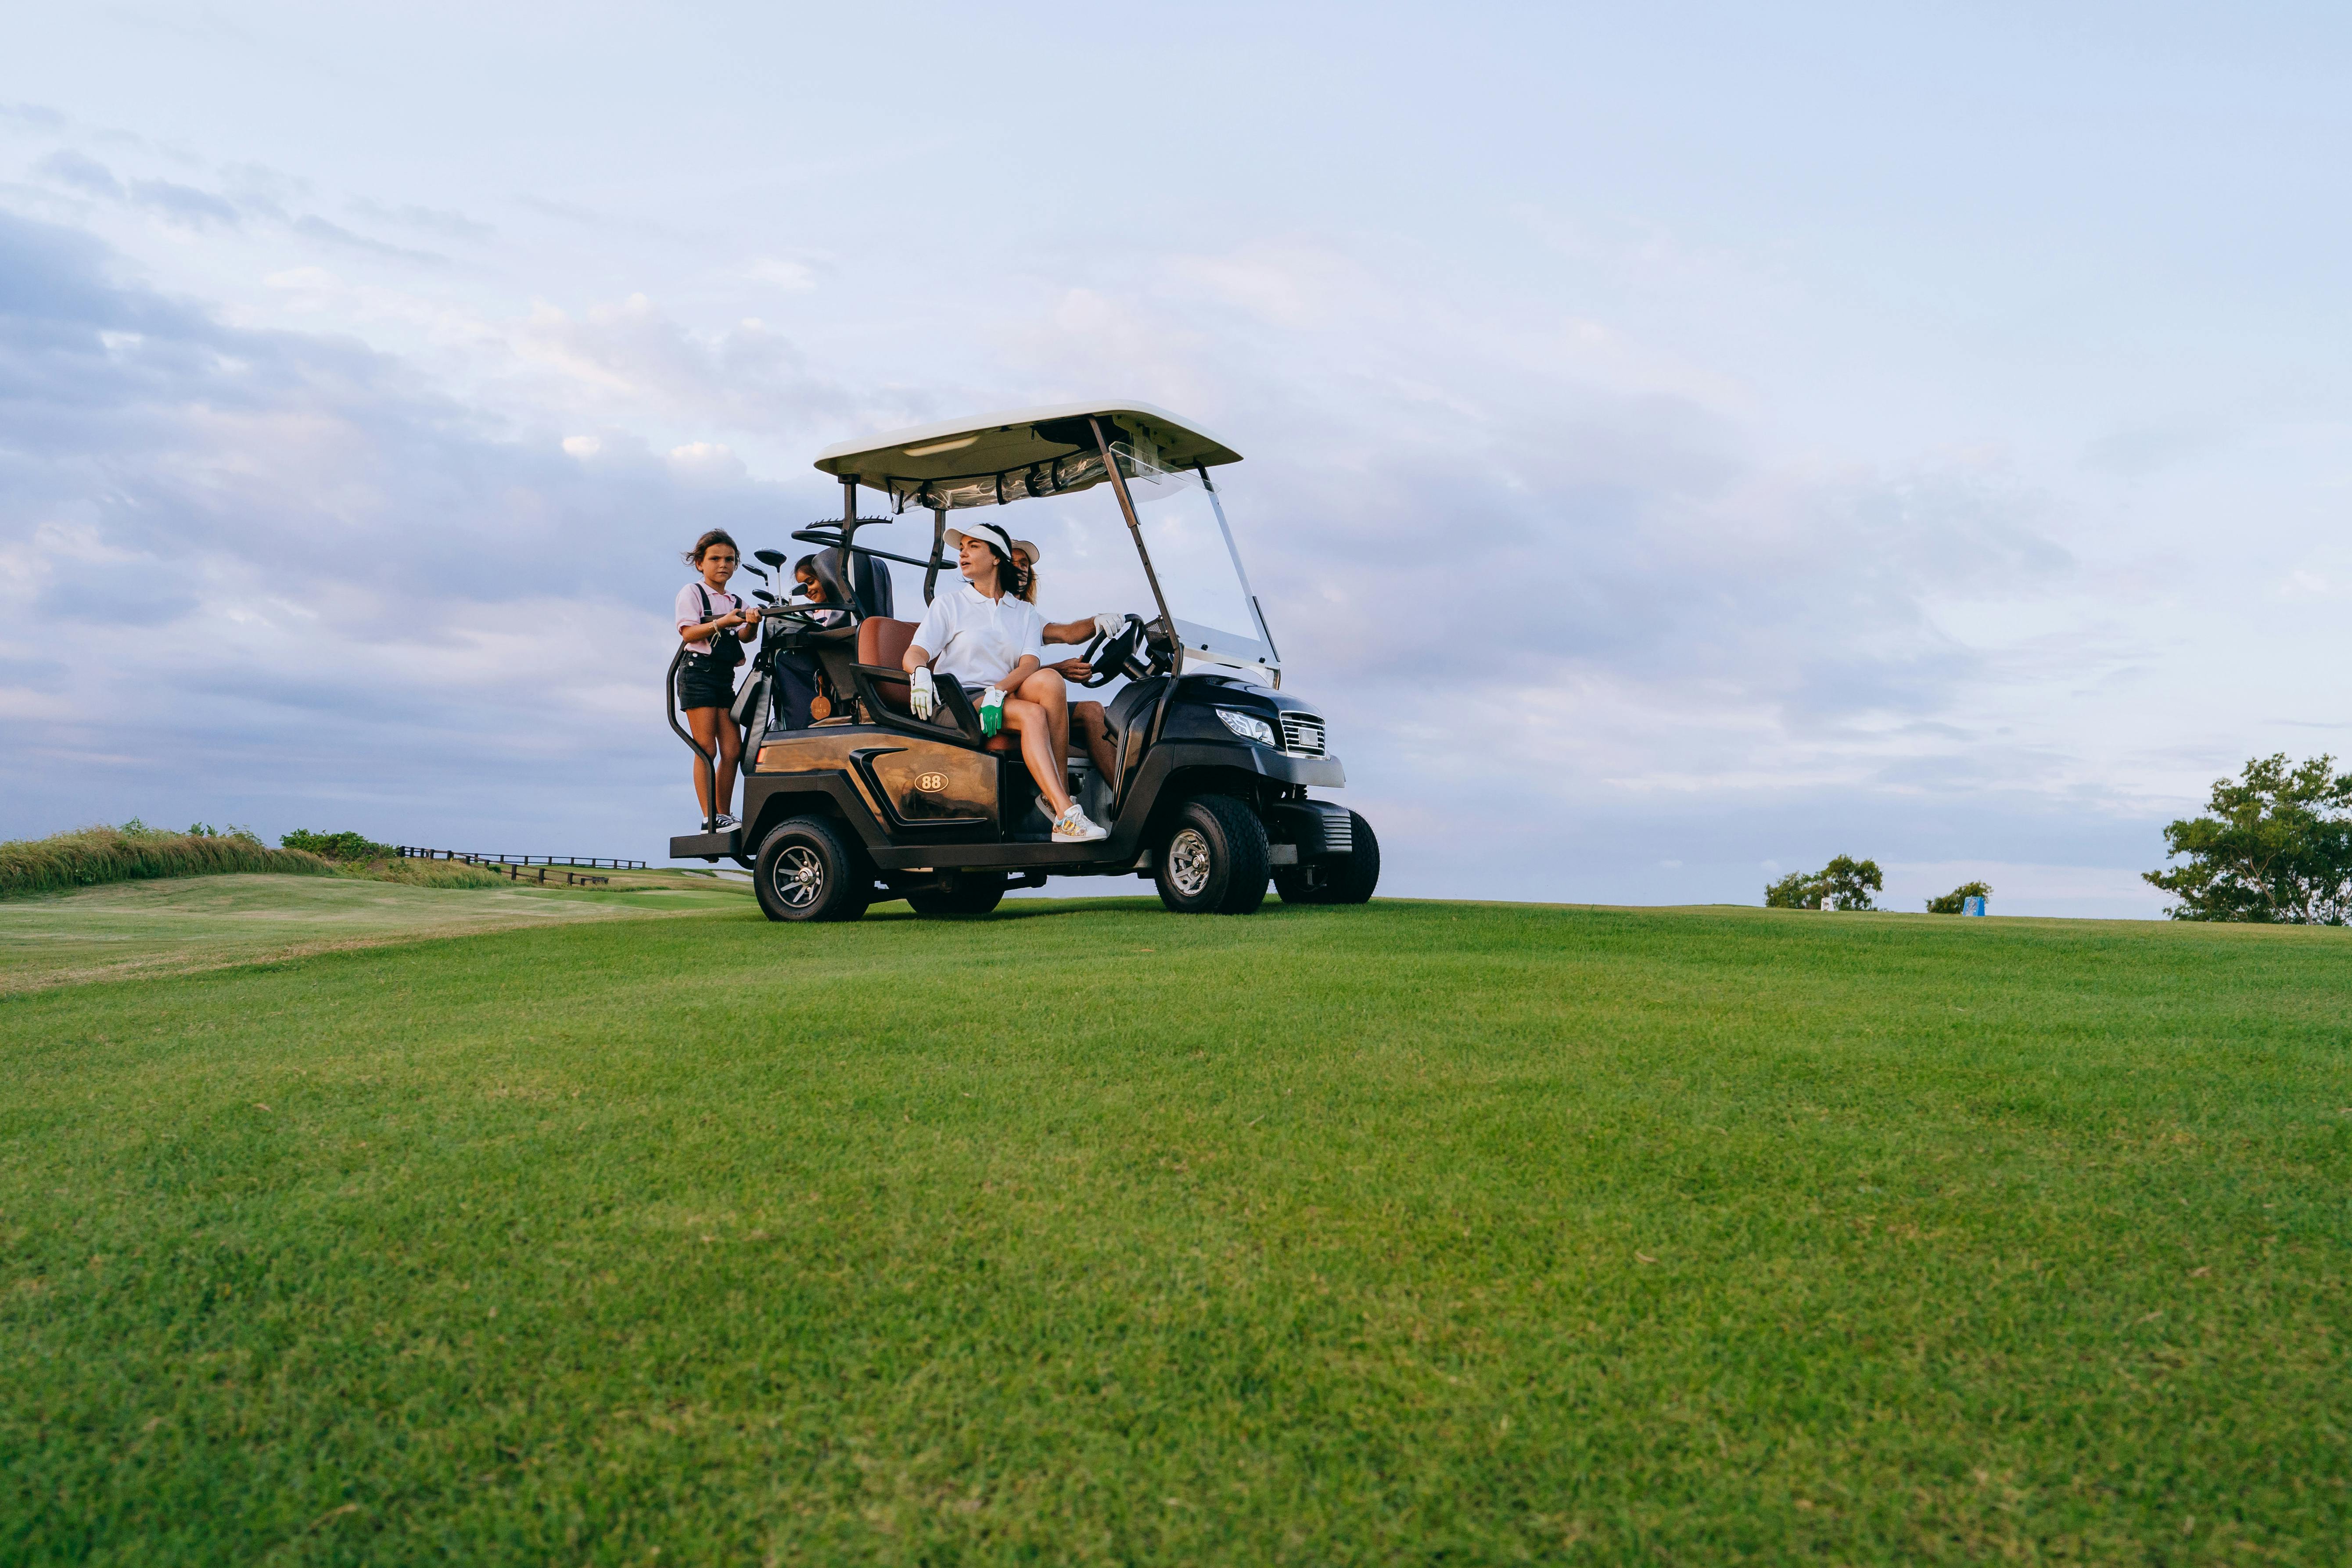 golfers on golf cart